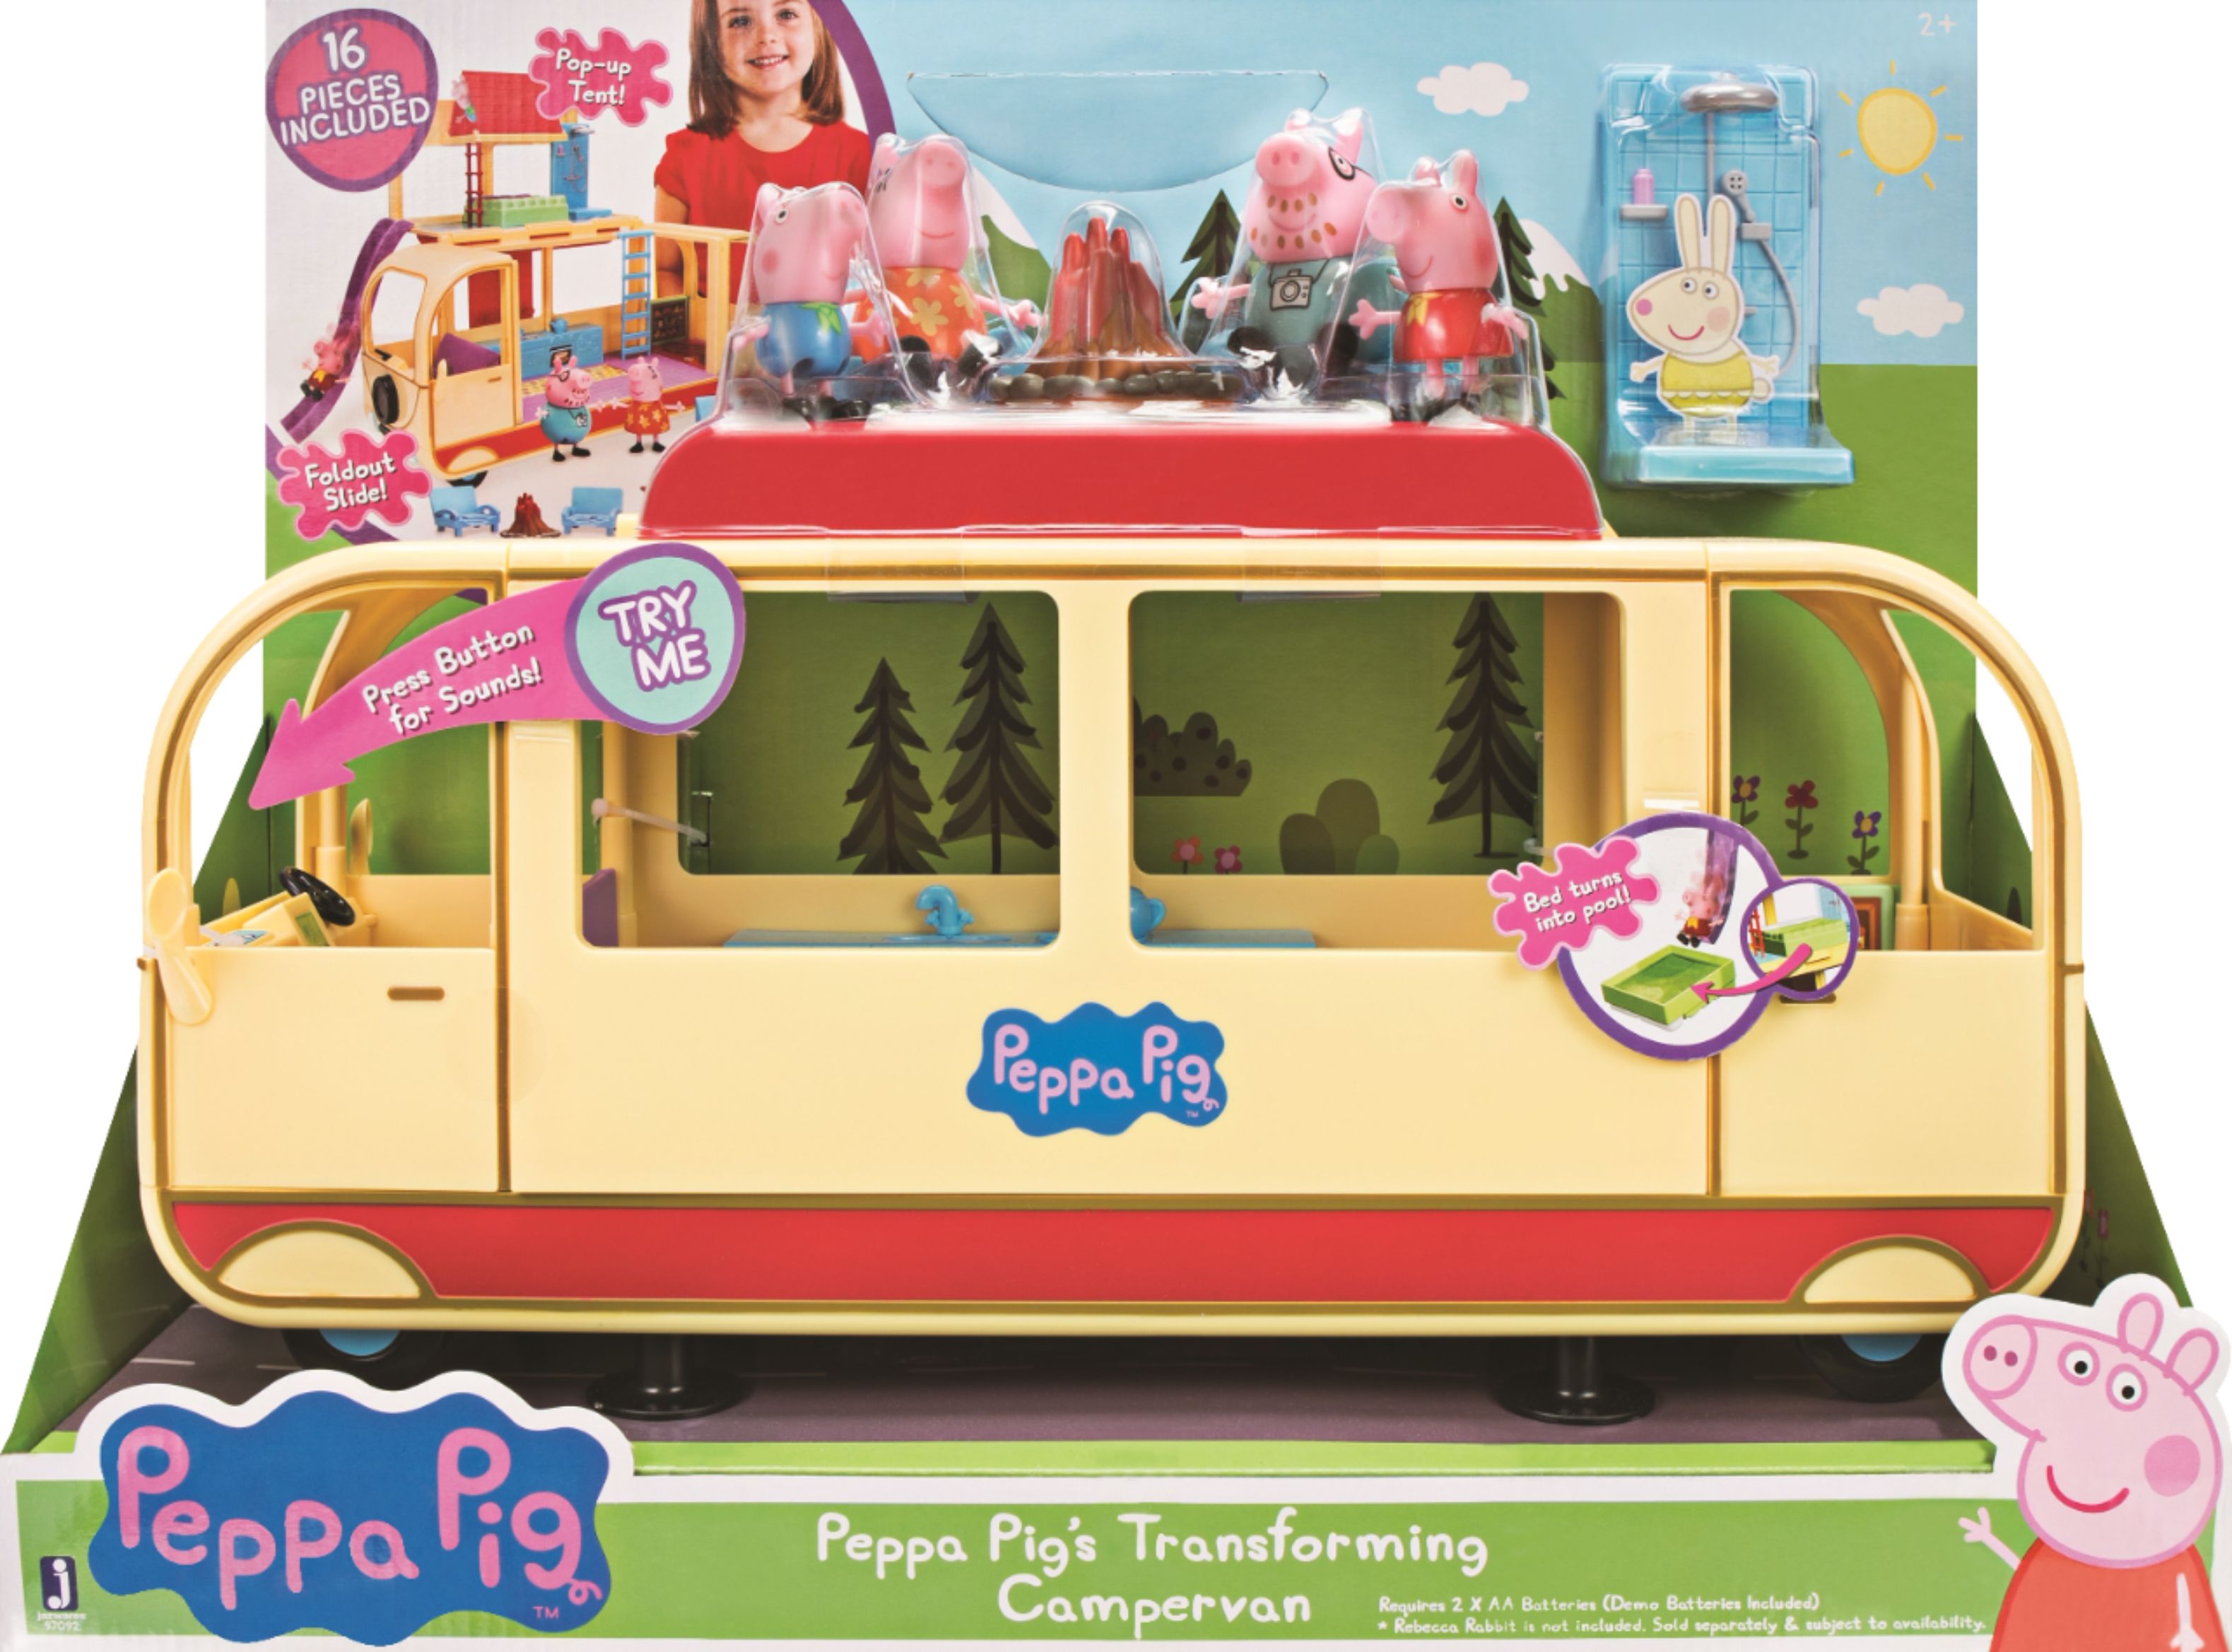 peppa pig's transforming campervan feature playset